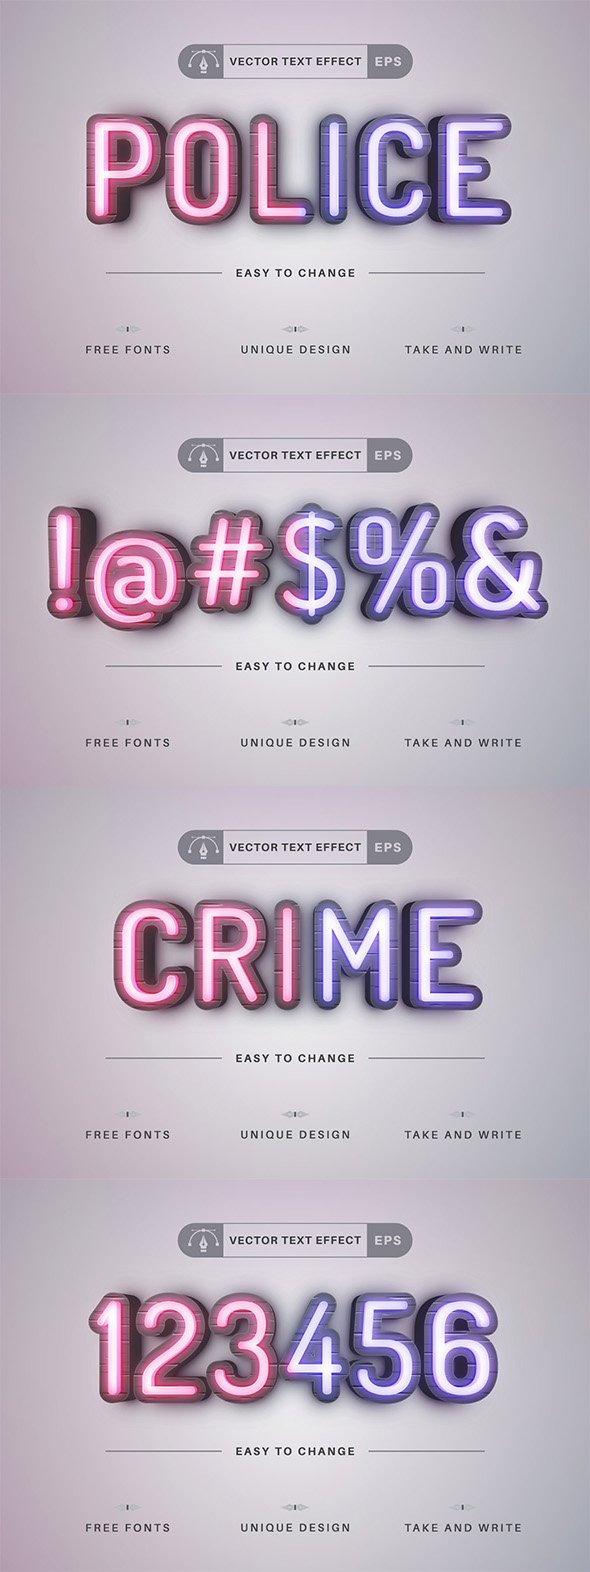 CreativeMarket - Police - Editable Text Effect - 16534033